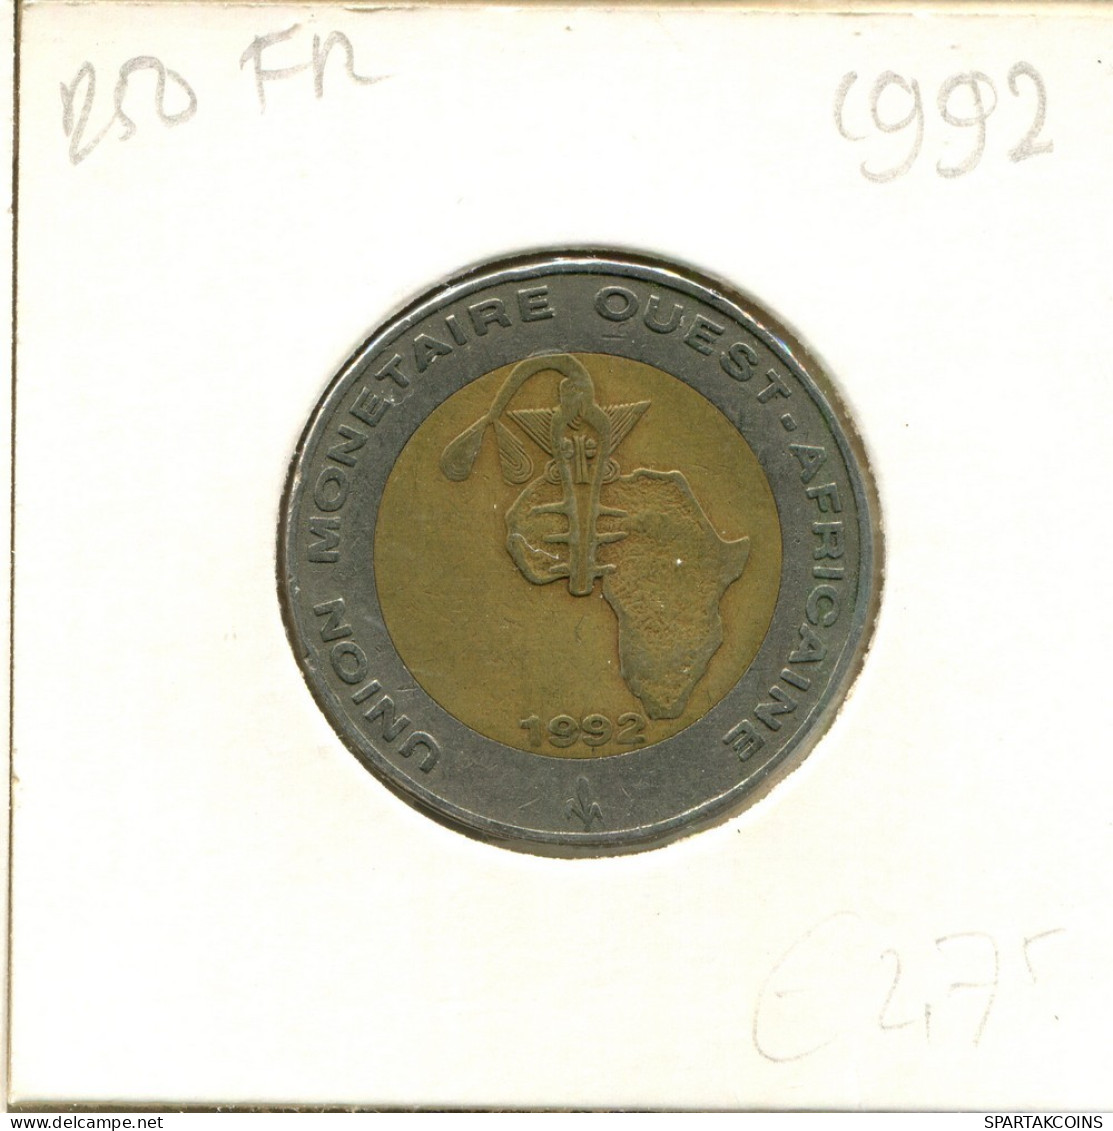 250 FRANCS CFA 1992 Western African States (BCEAO) BIMETALLIC Moneda #AT059.E.A - Andere - Afrika